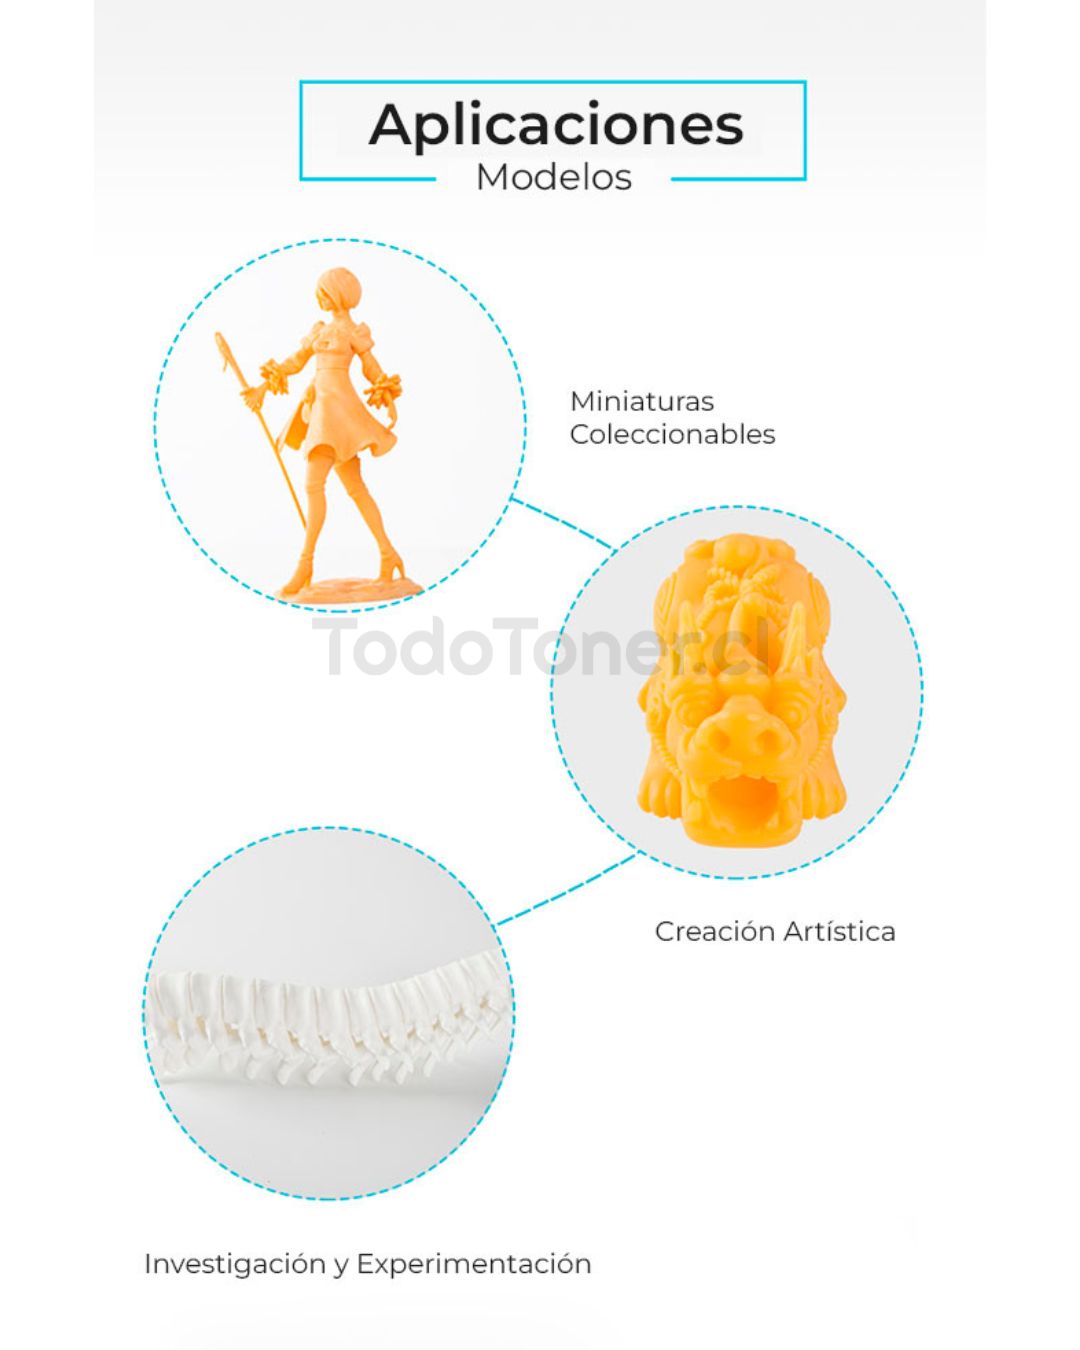 Resina Verde para Impresoras 3D 500g Creality | Resinas